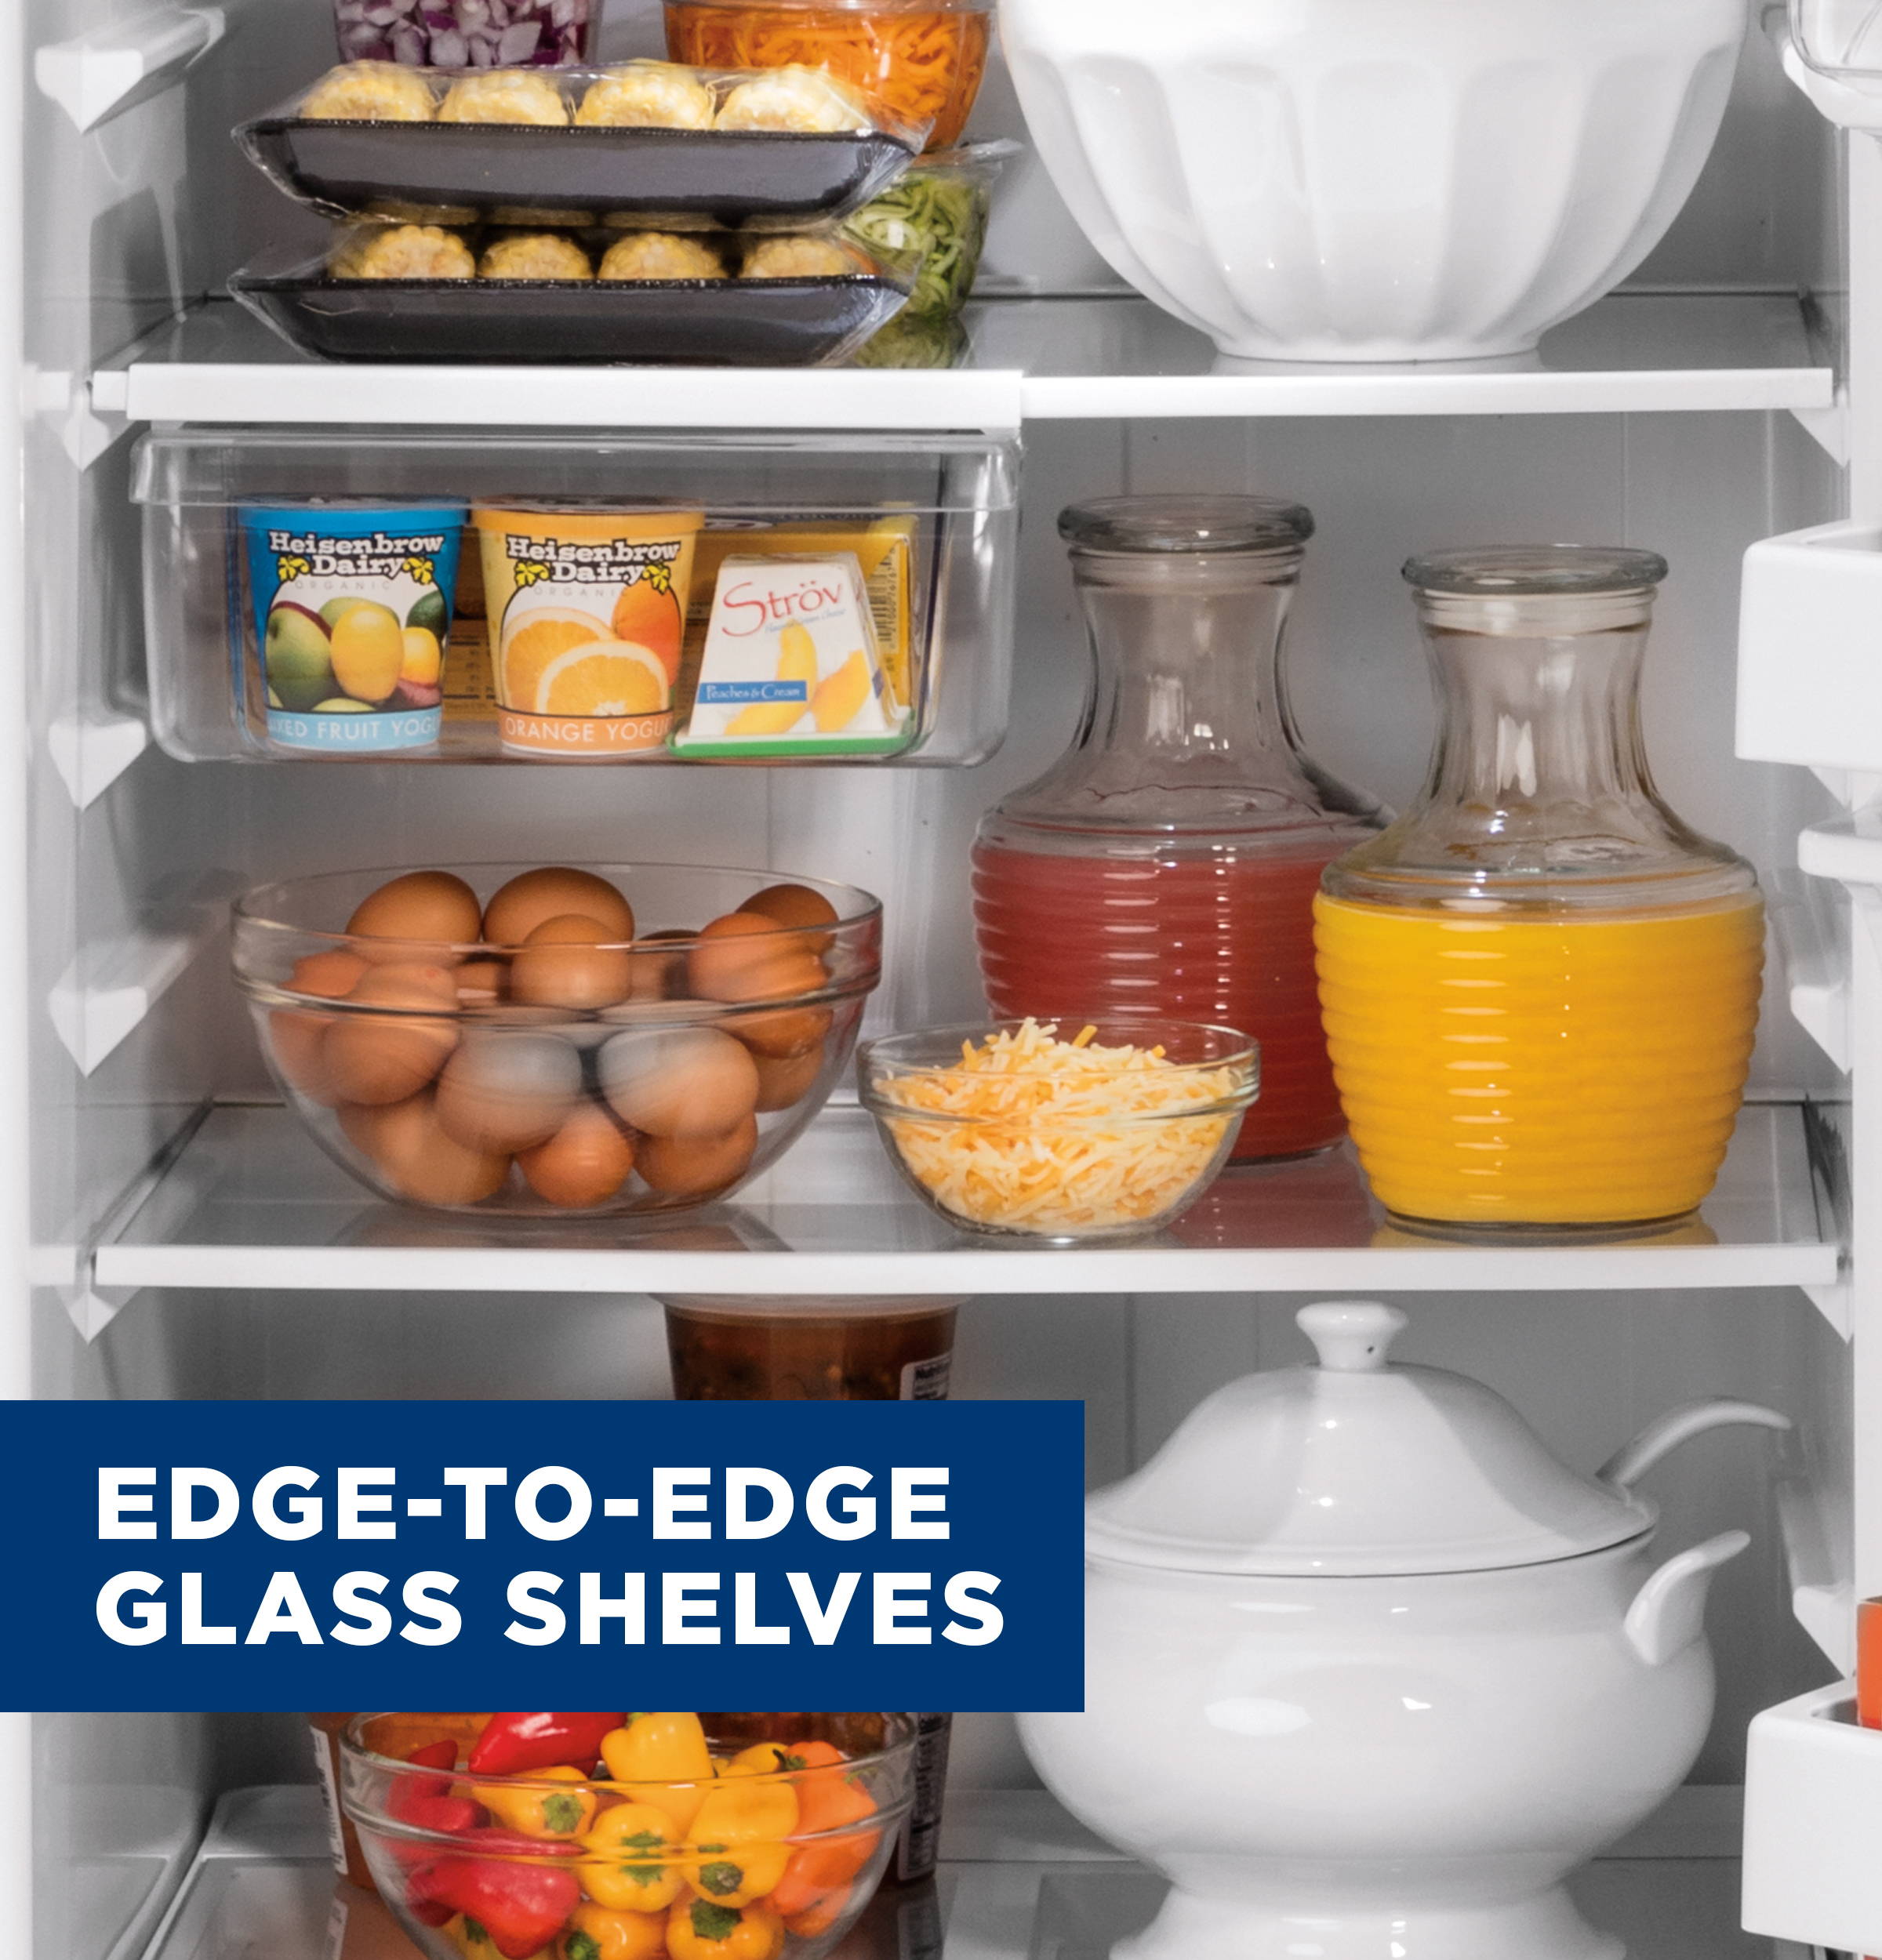 Top Freezer Refrigerator with Edge-to-Edge Glass Shelves